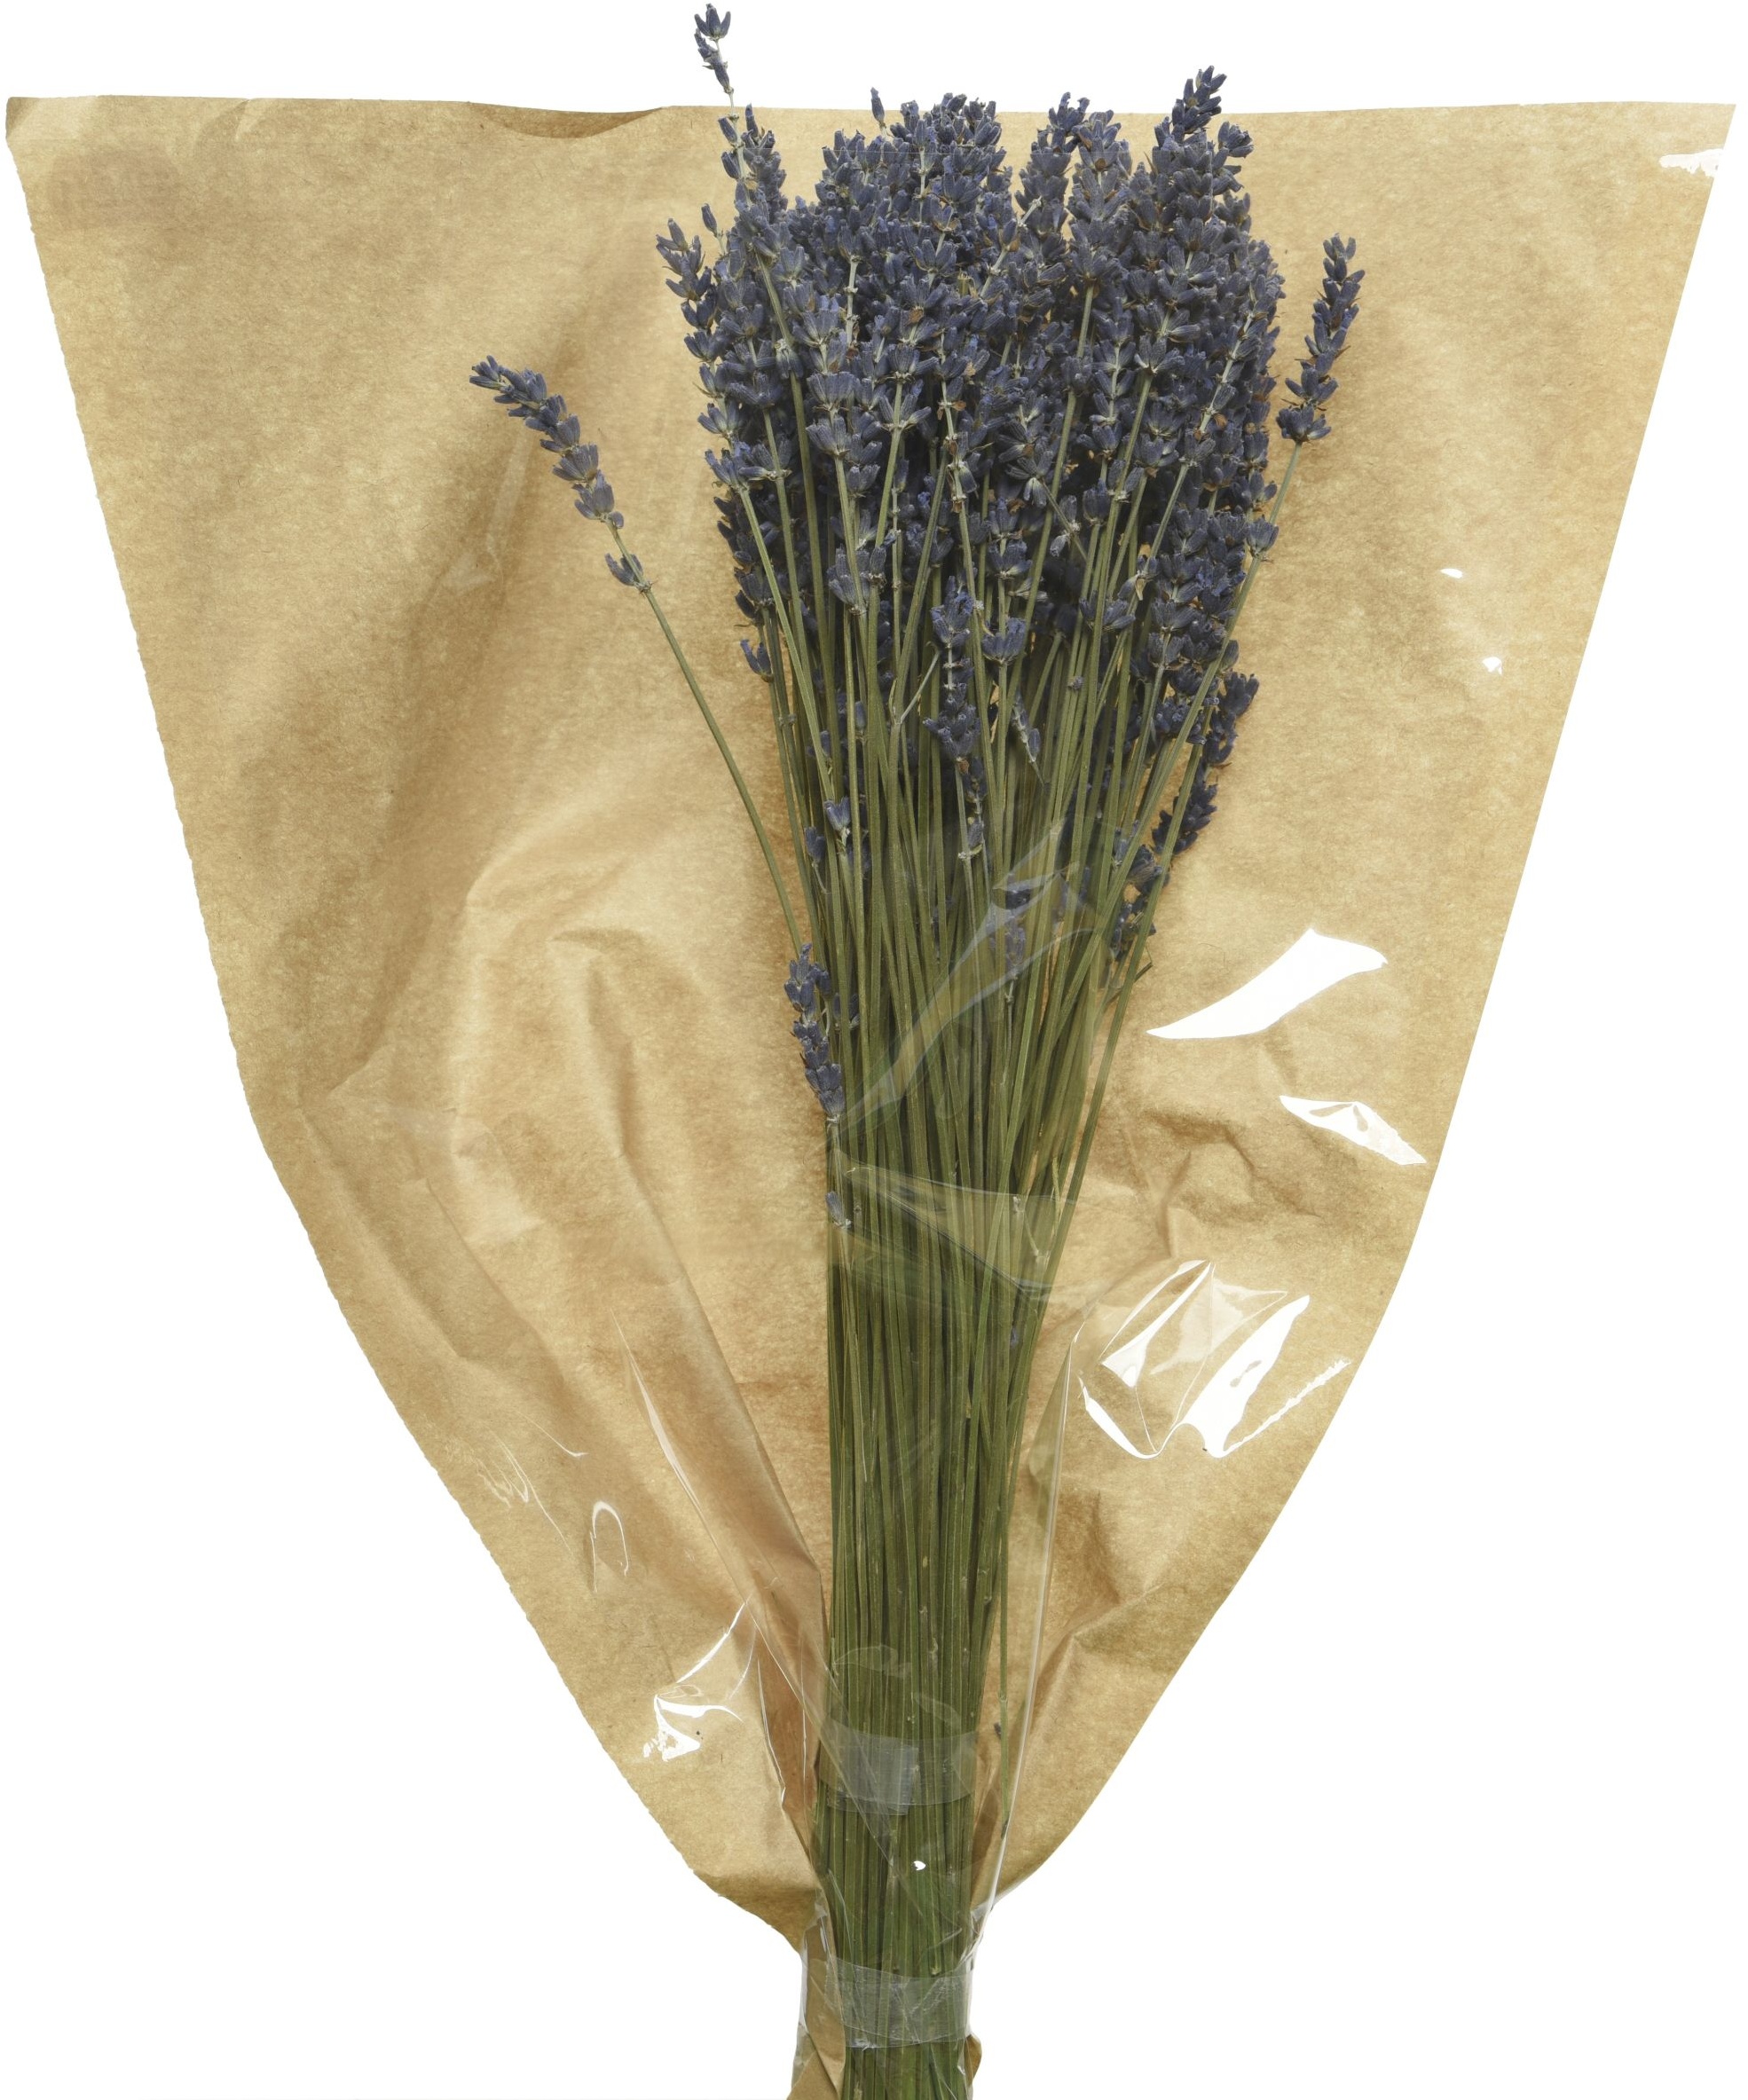 Lavendel getrocknet (H 50 cm) - lila